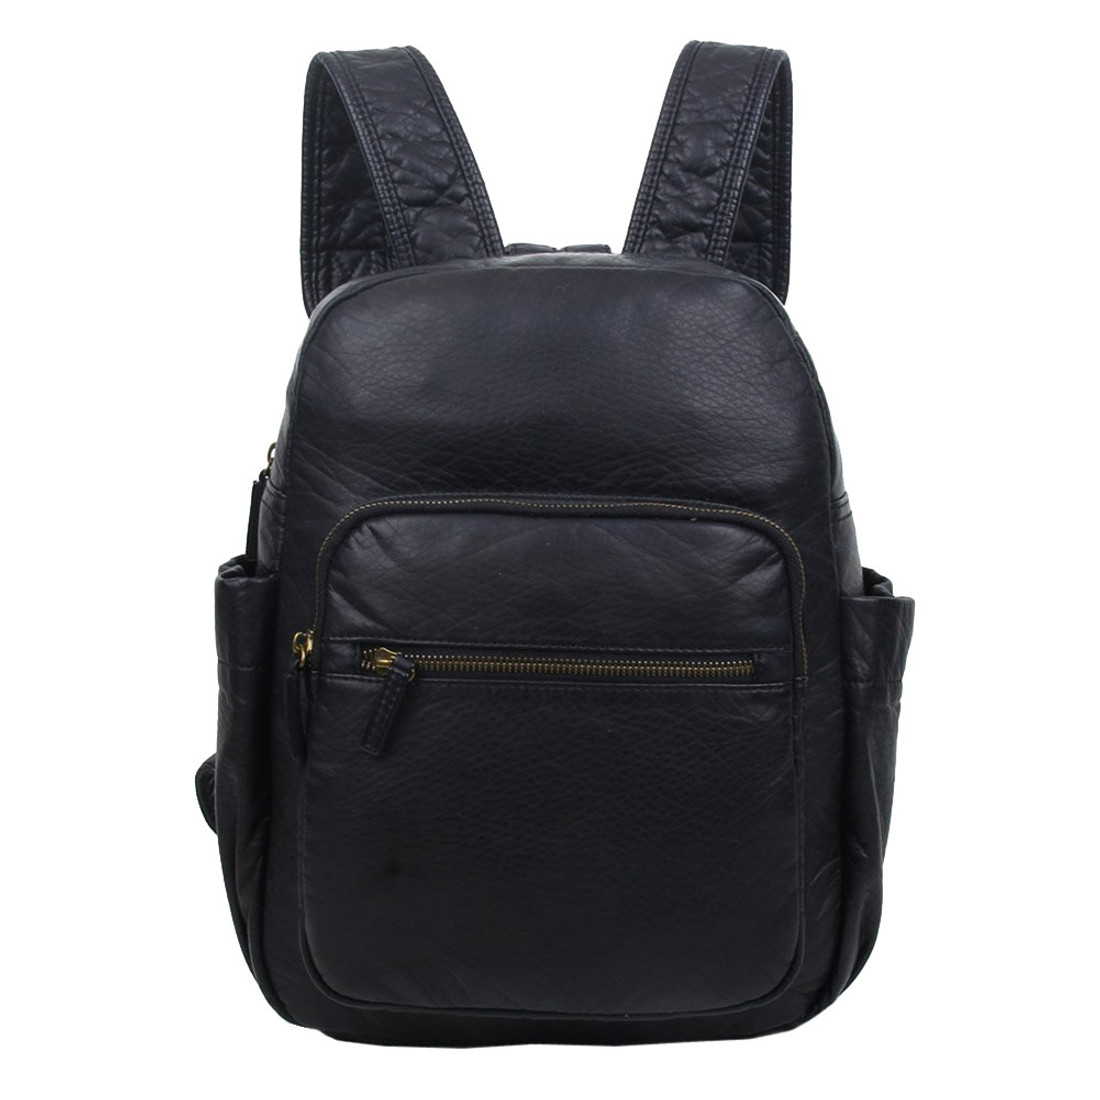 The Marie Backpack Purse Black Vegan Leather Travel Bag